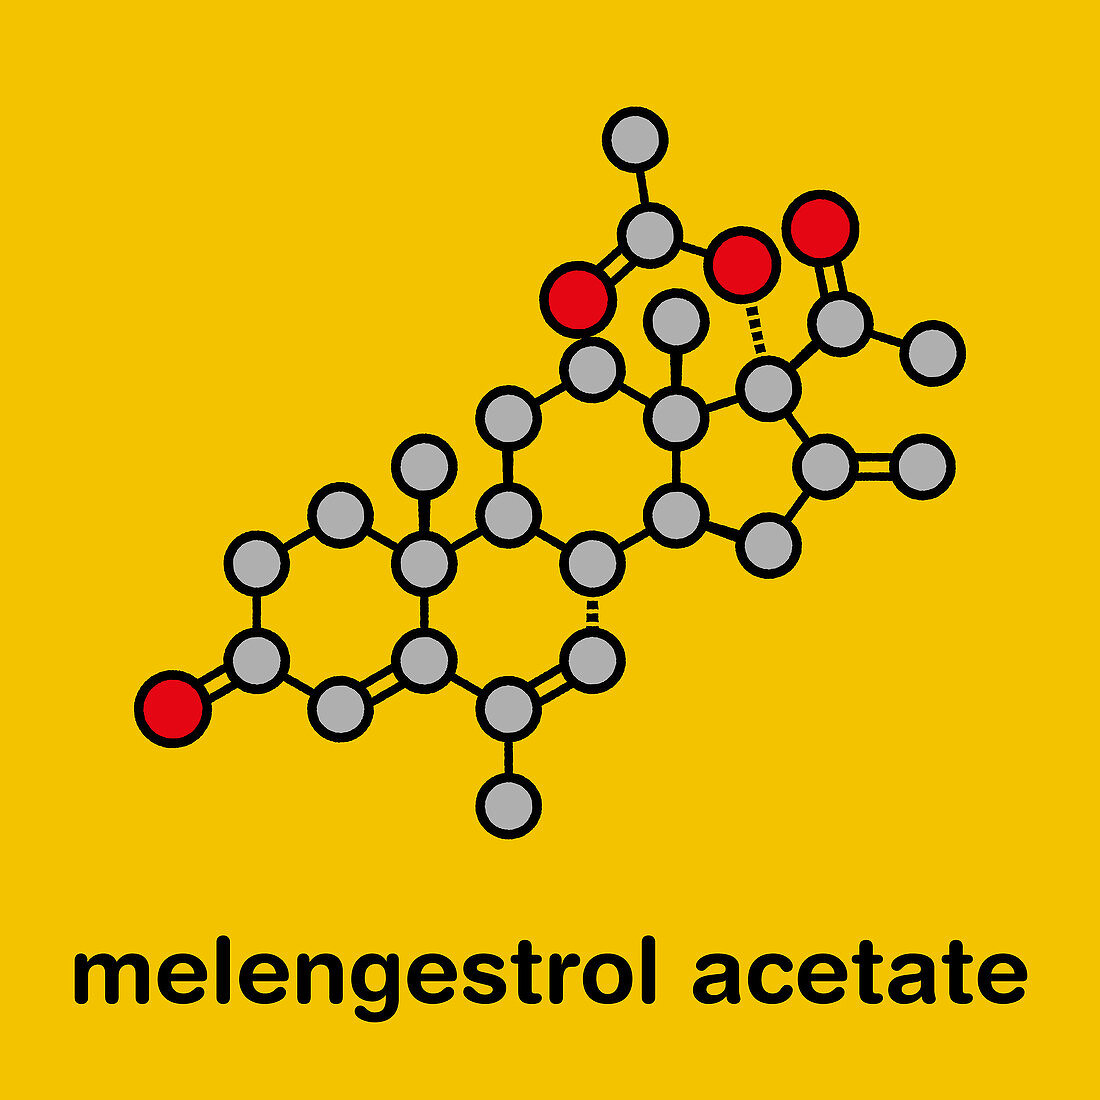 Melengestrol acetate cattle growth promoter, illustration